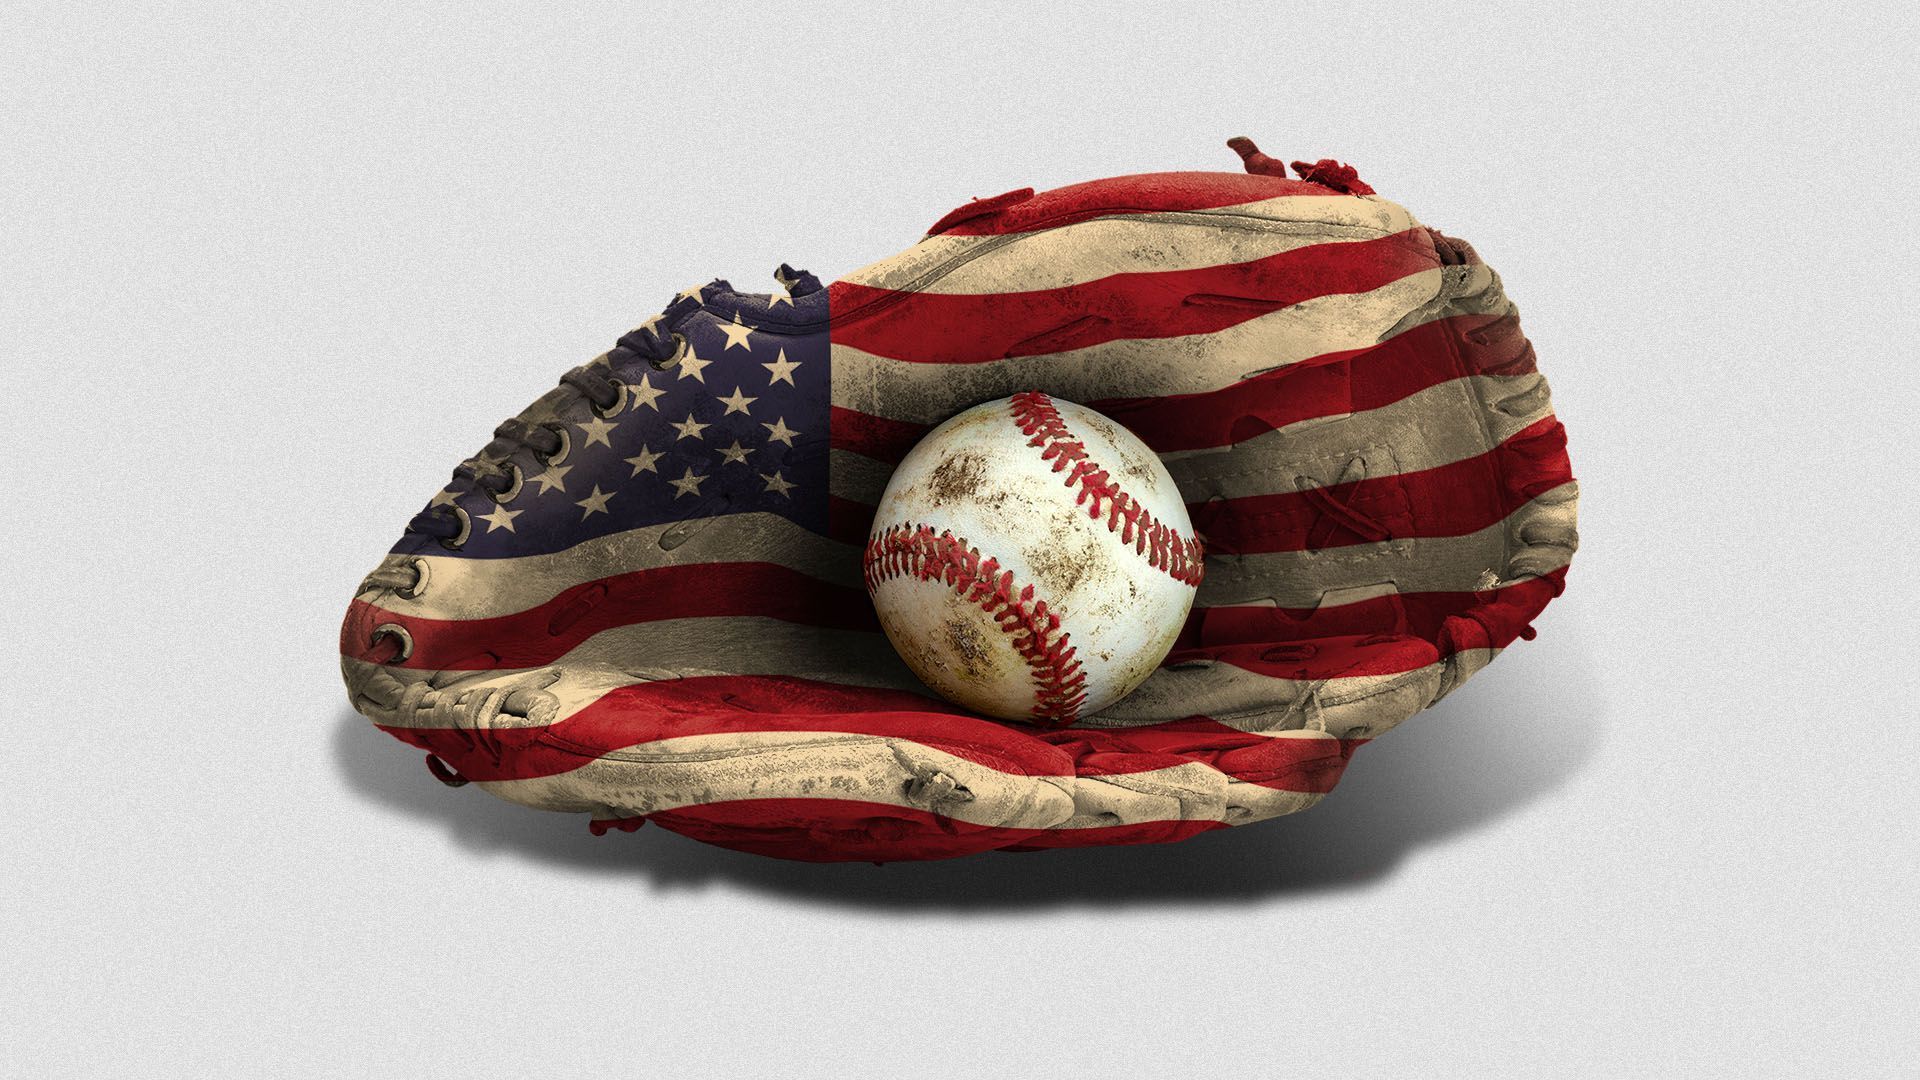 Illustration of an American flag baseball glove